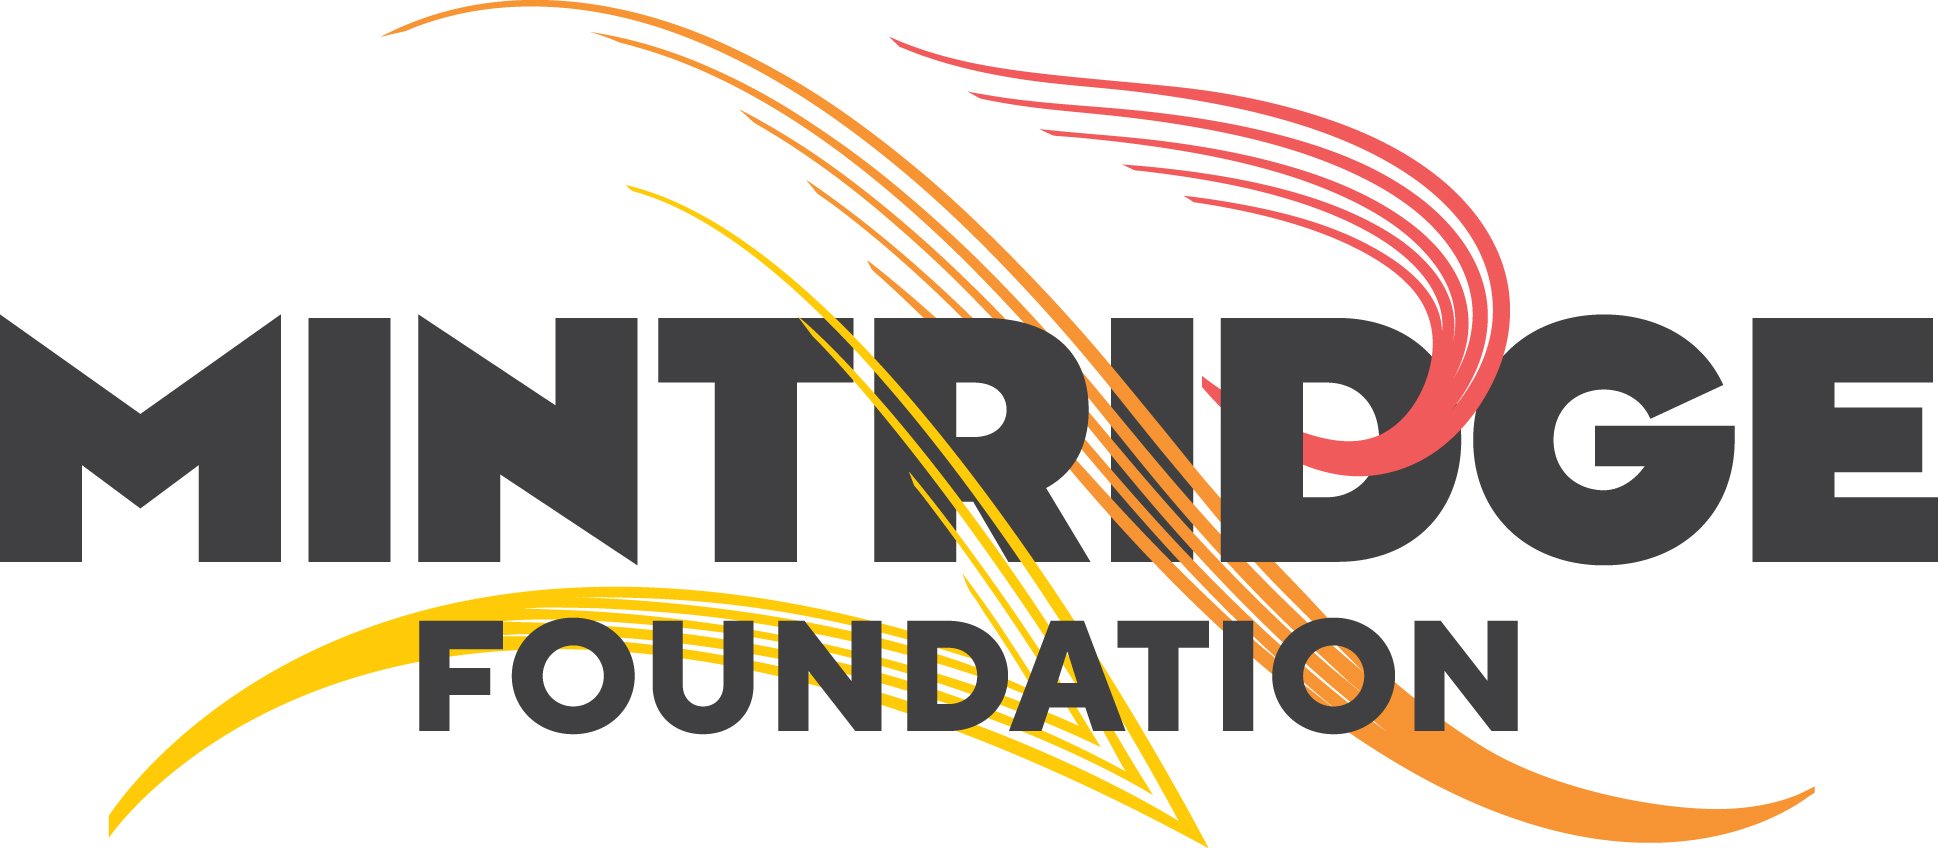 The Mintridge Foundation Donation